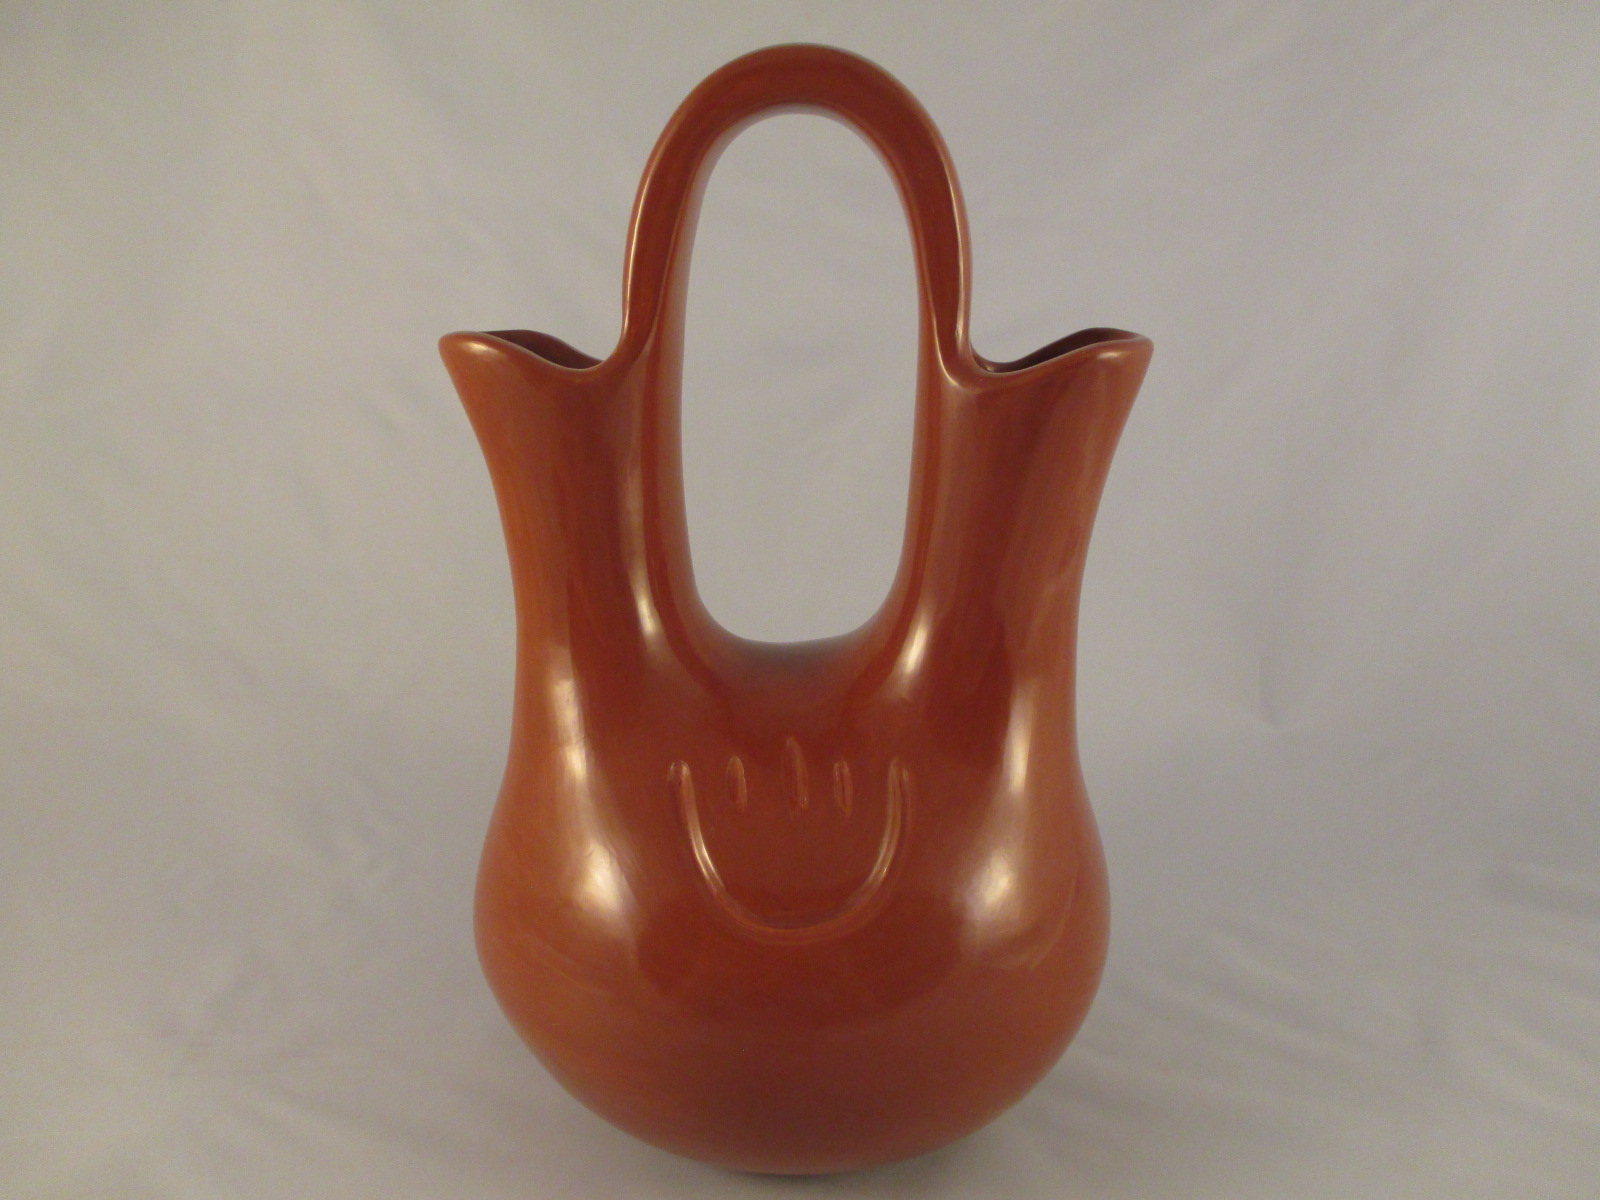 Santa Clara Pottery Wedding Vase by Jason Ebelacker